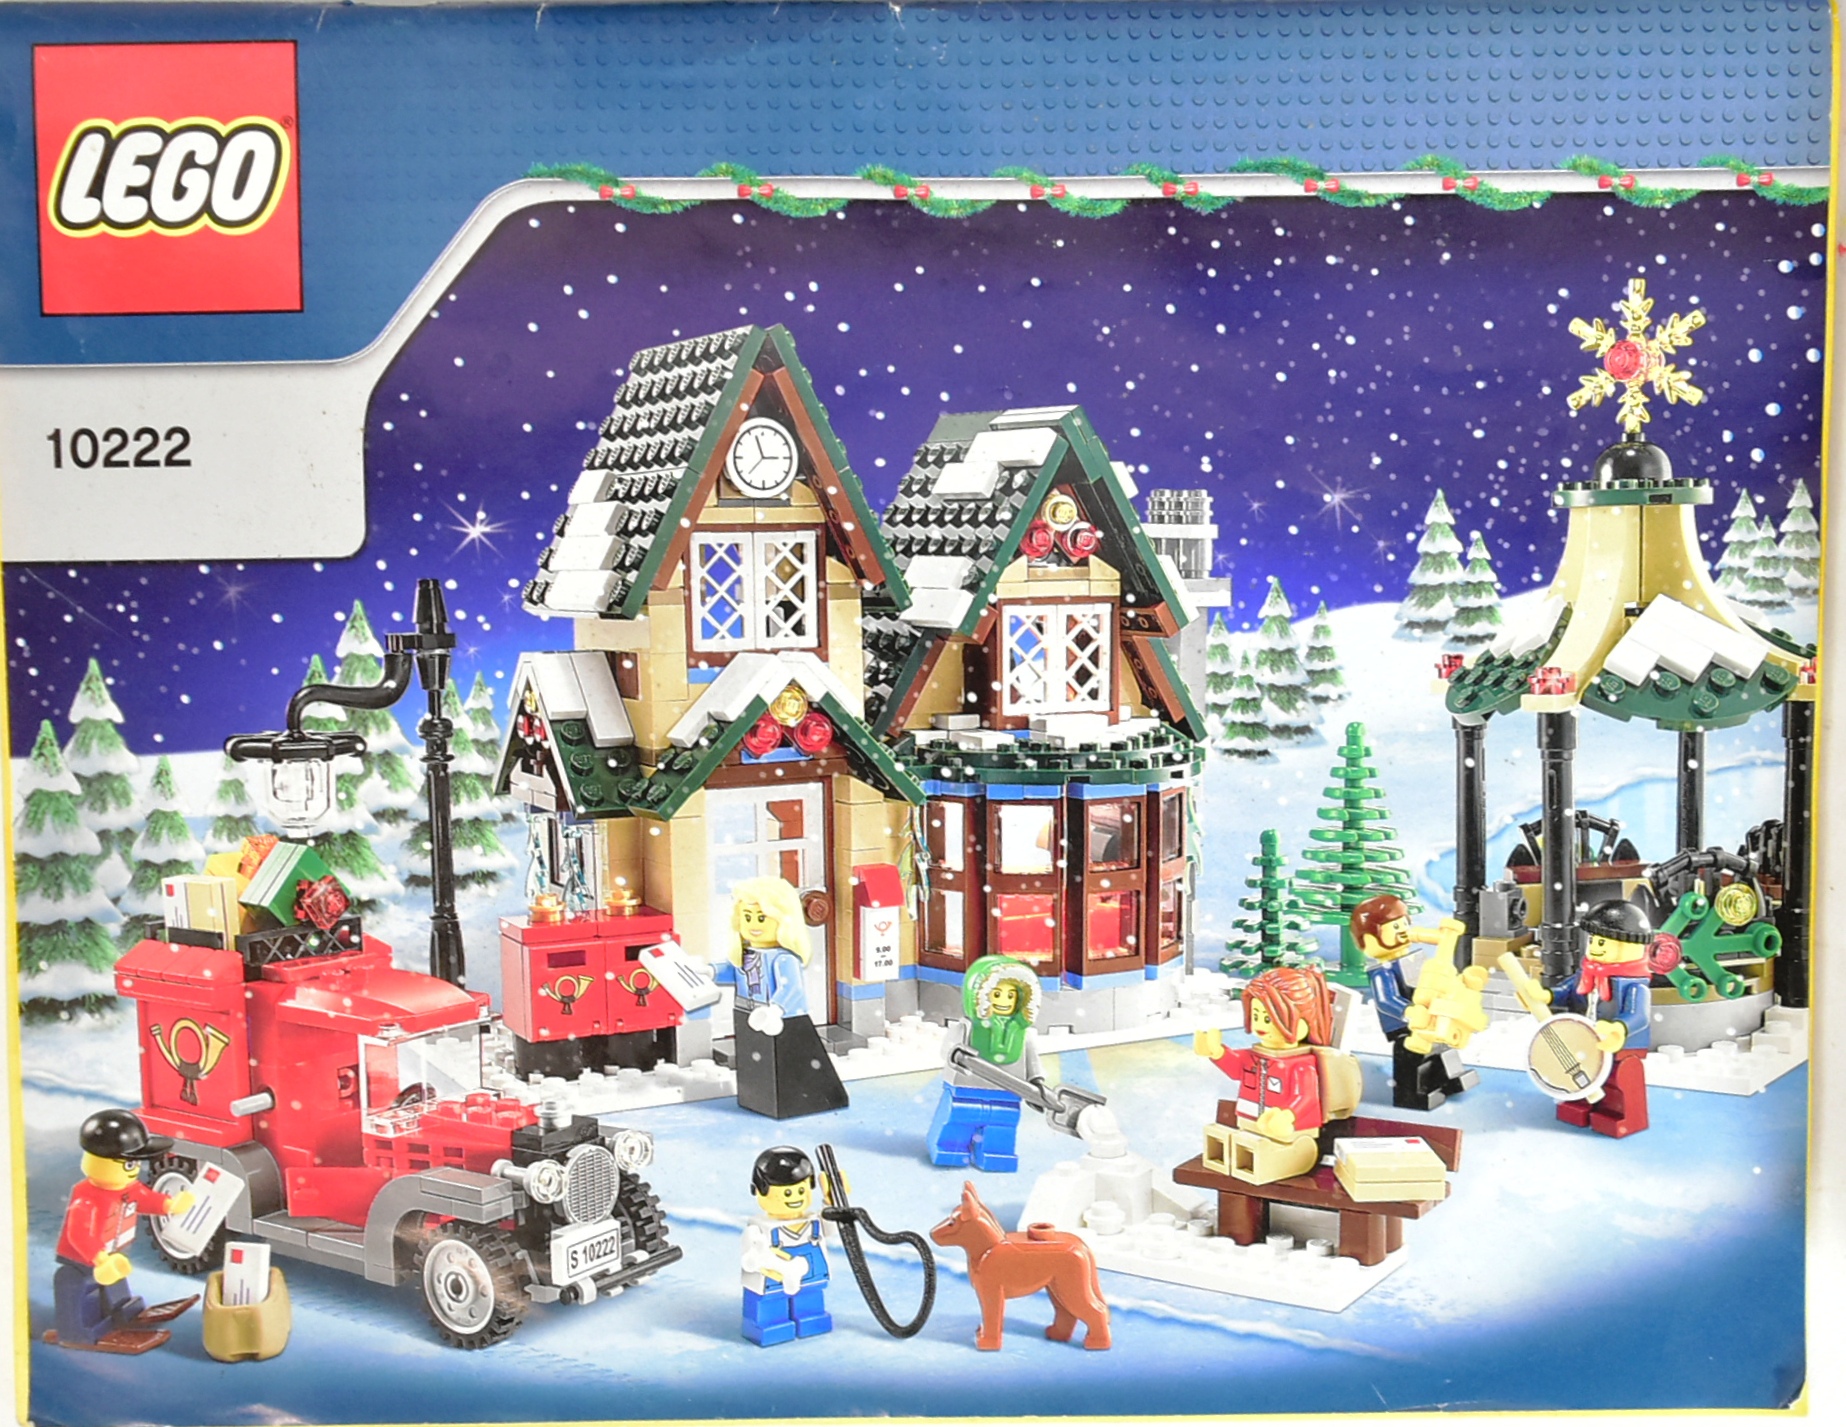 LEGO - 10222 - WINTER VILLAGE POST OFFICE - Image 2 of 5